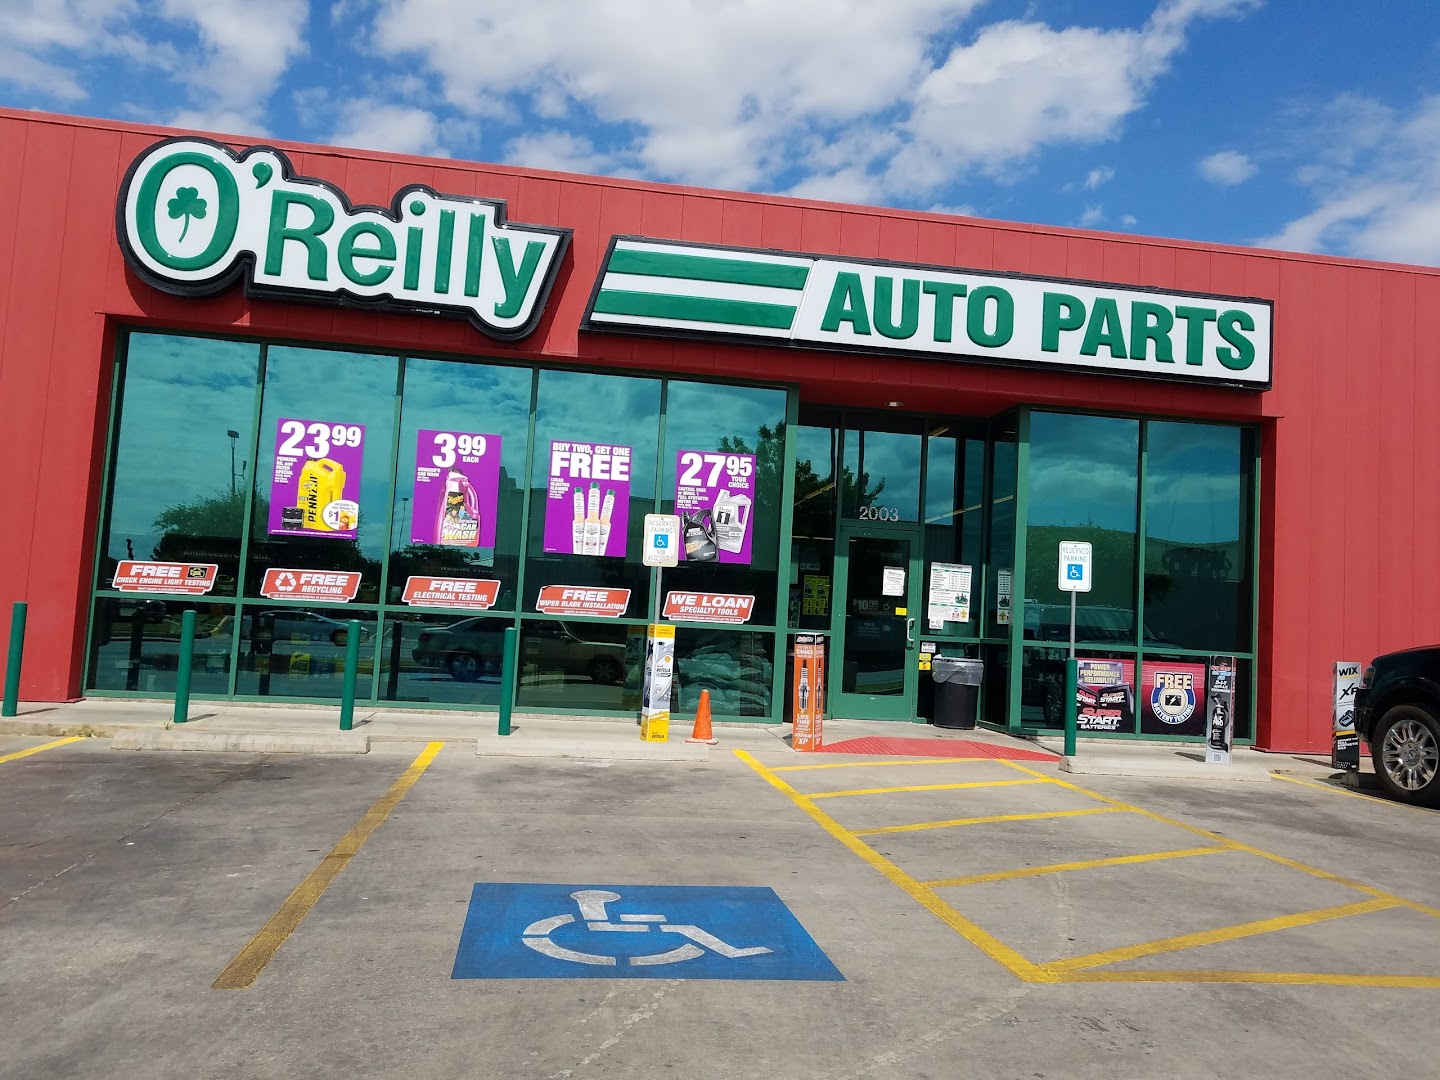 Auto parts store In Big Spring TX 